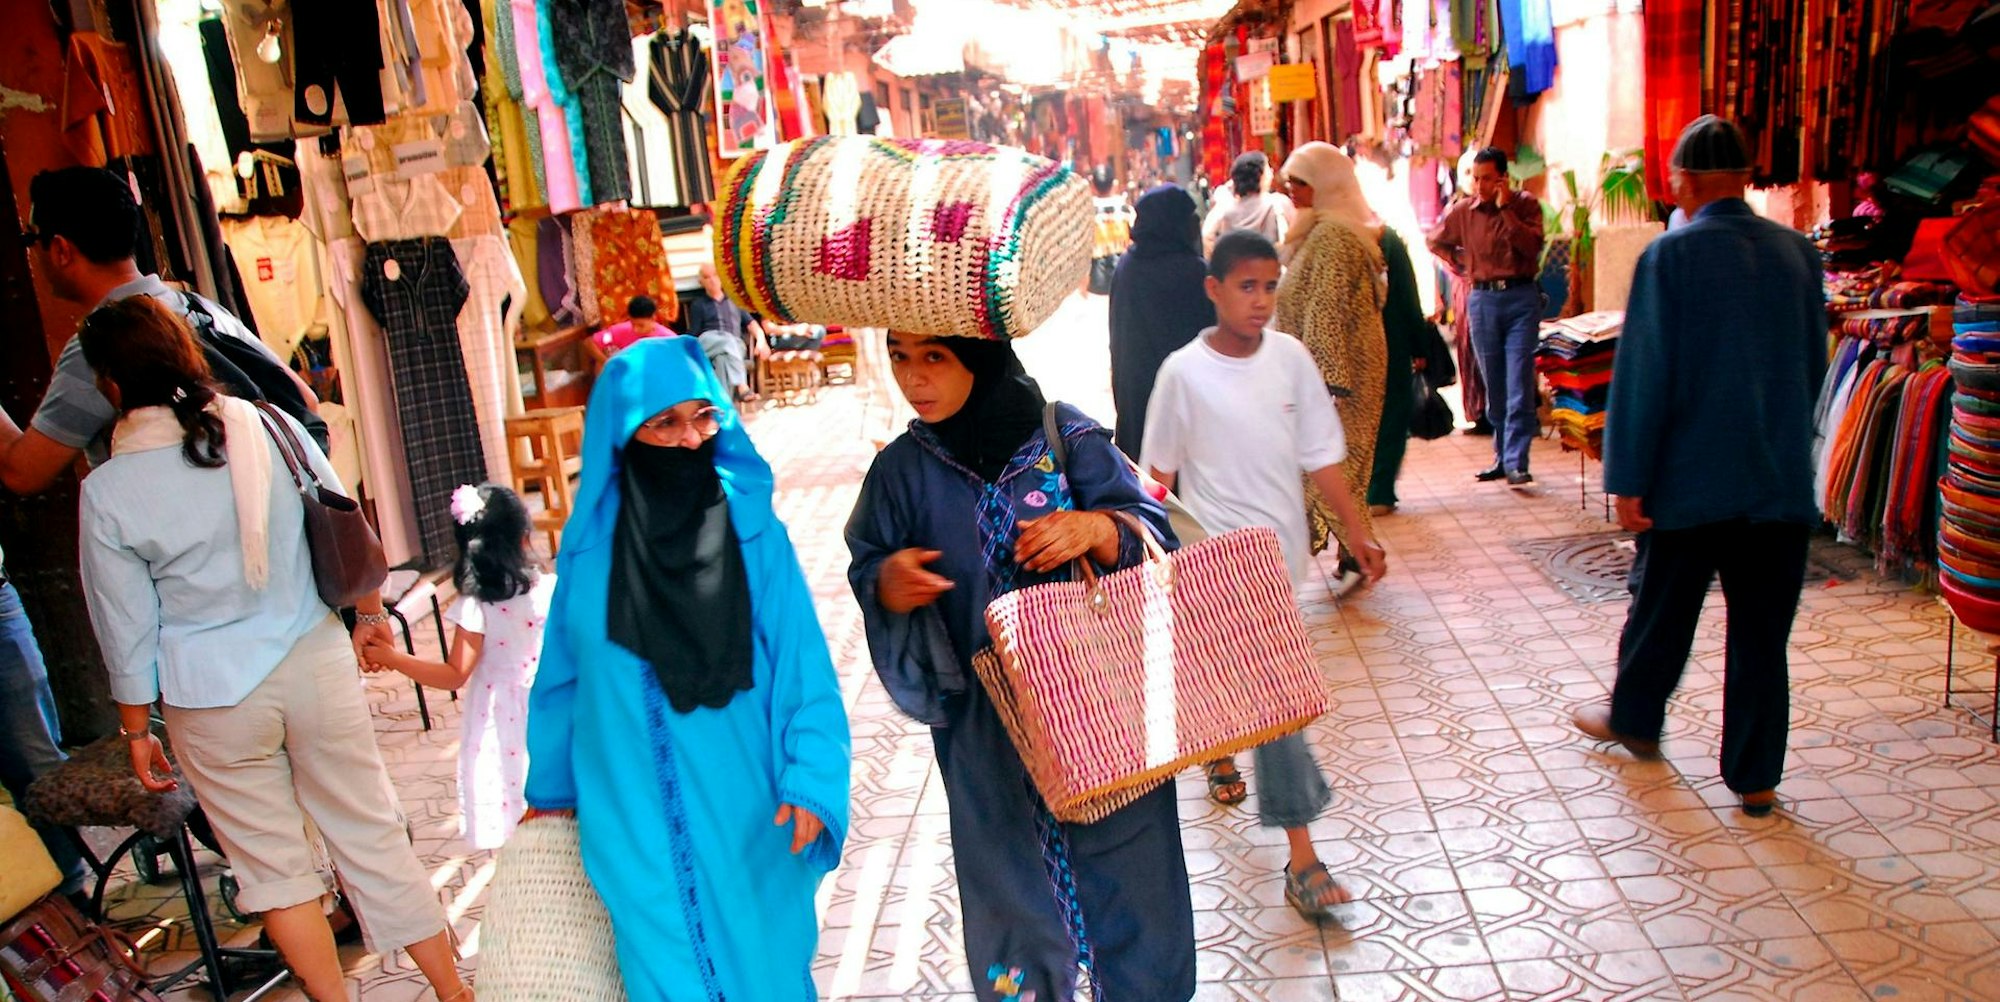 Marokko Straßenszene